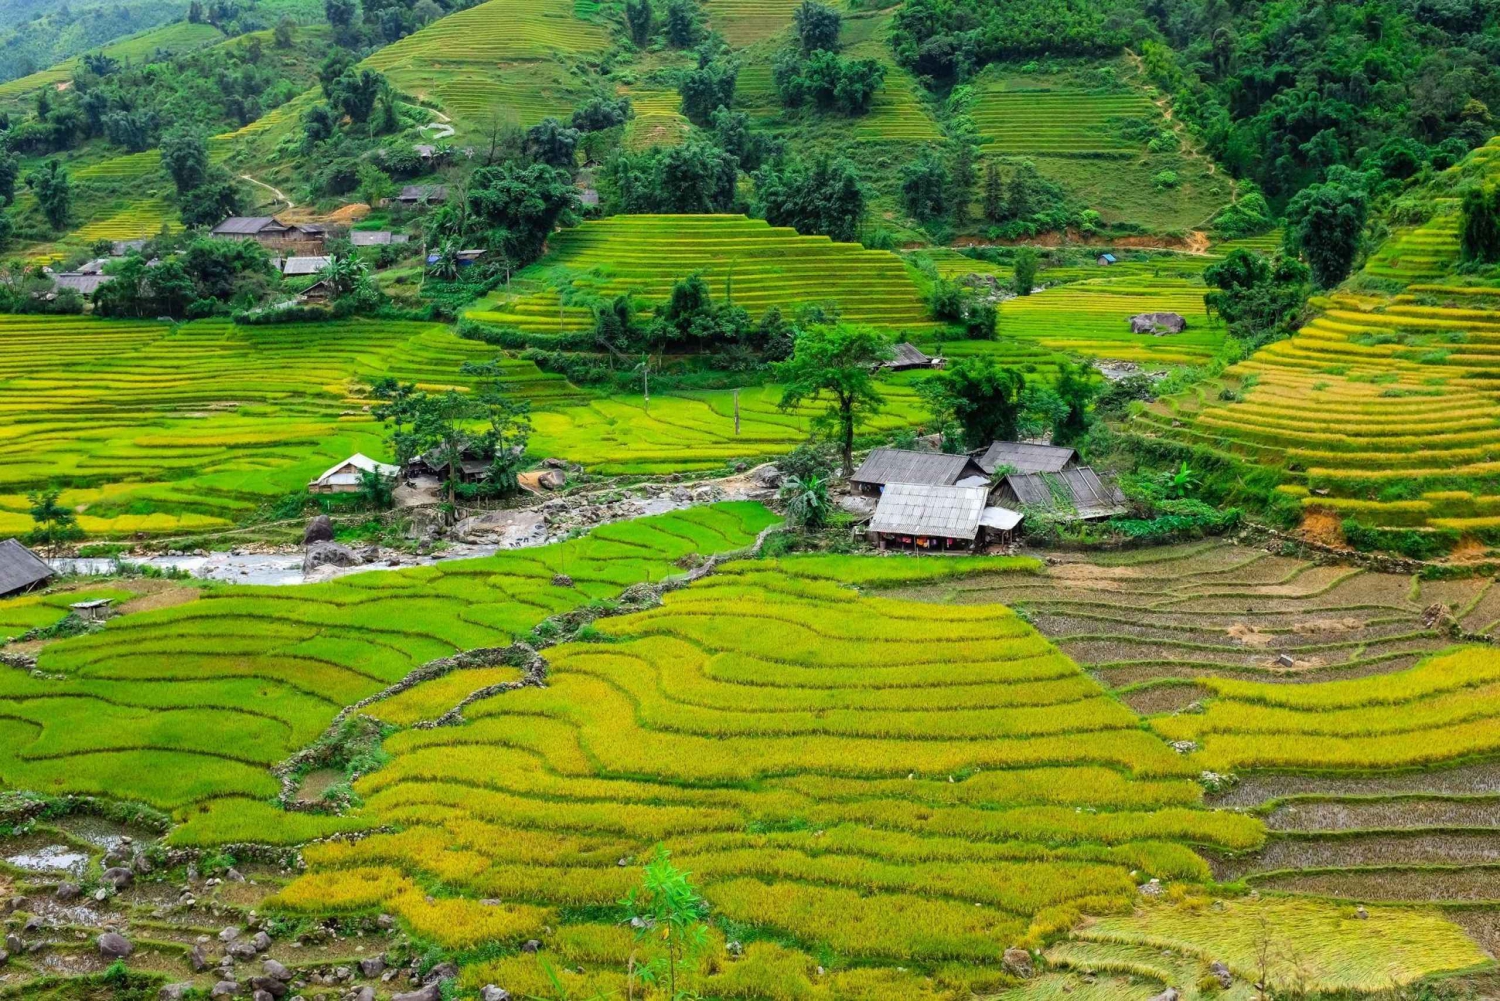 Sapa beautiful rice field, village - Easy walking kid,senior